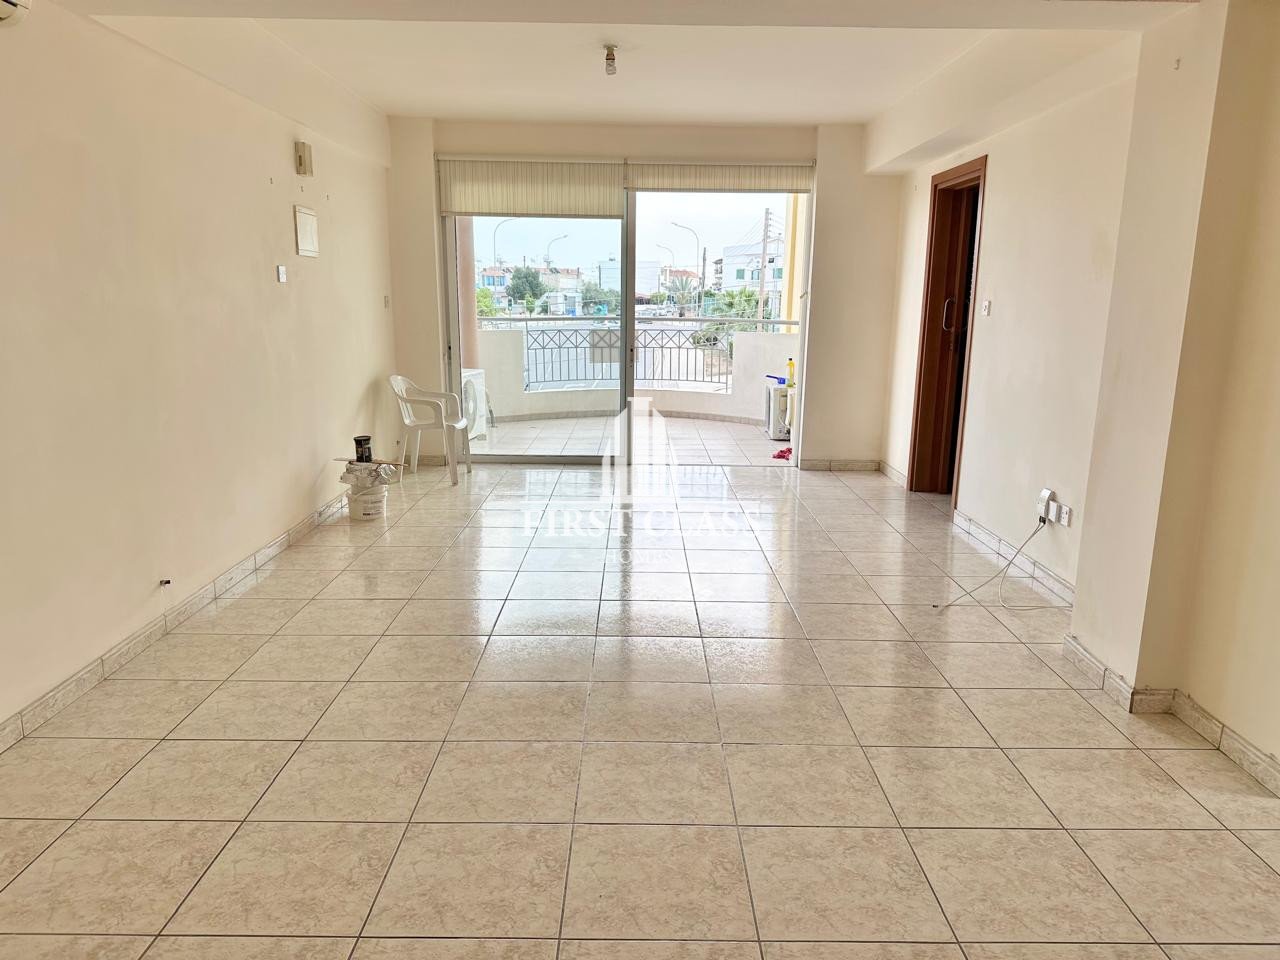 Property for Rent: Apartment (Flat) in Aglantzia (Platy), Nicosia for Rent | Key Realtor Cyprus